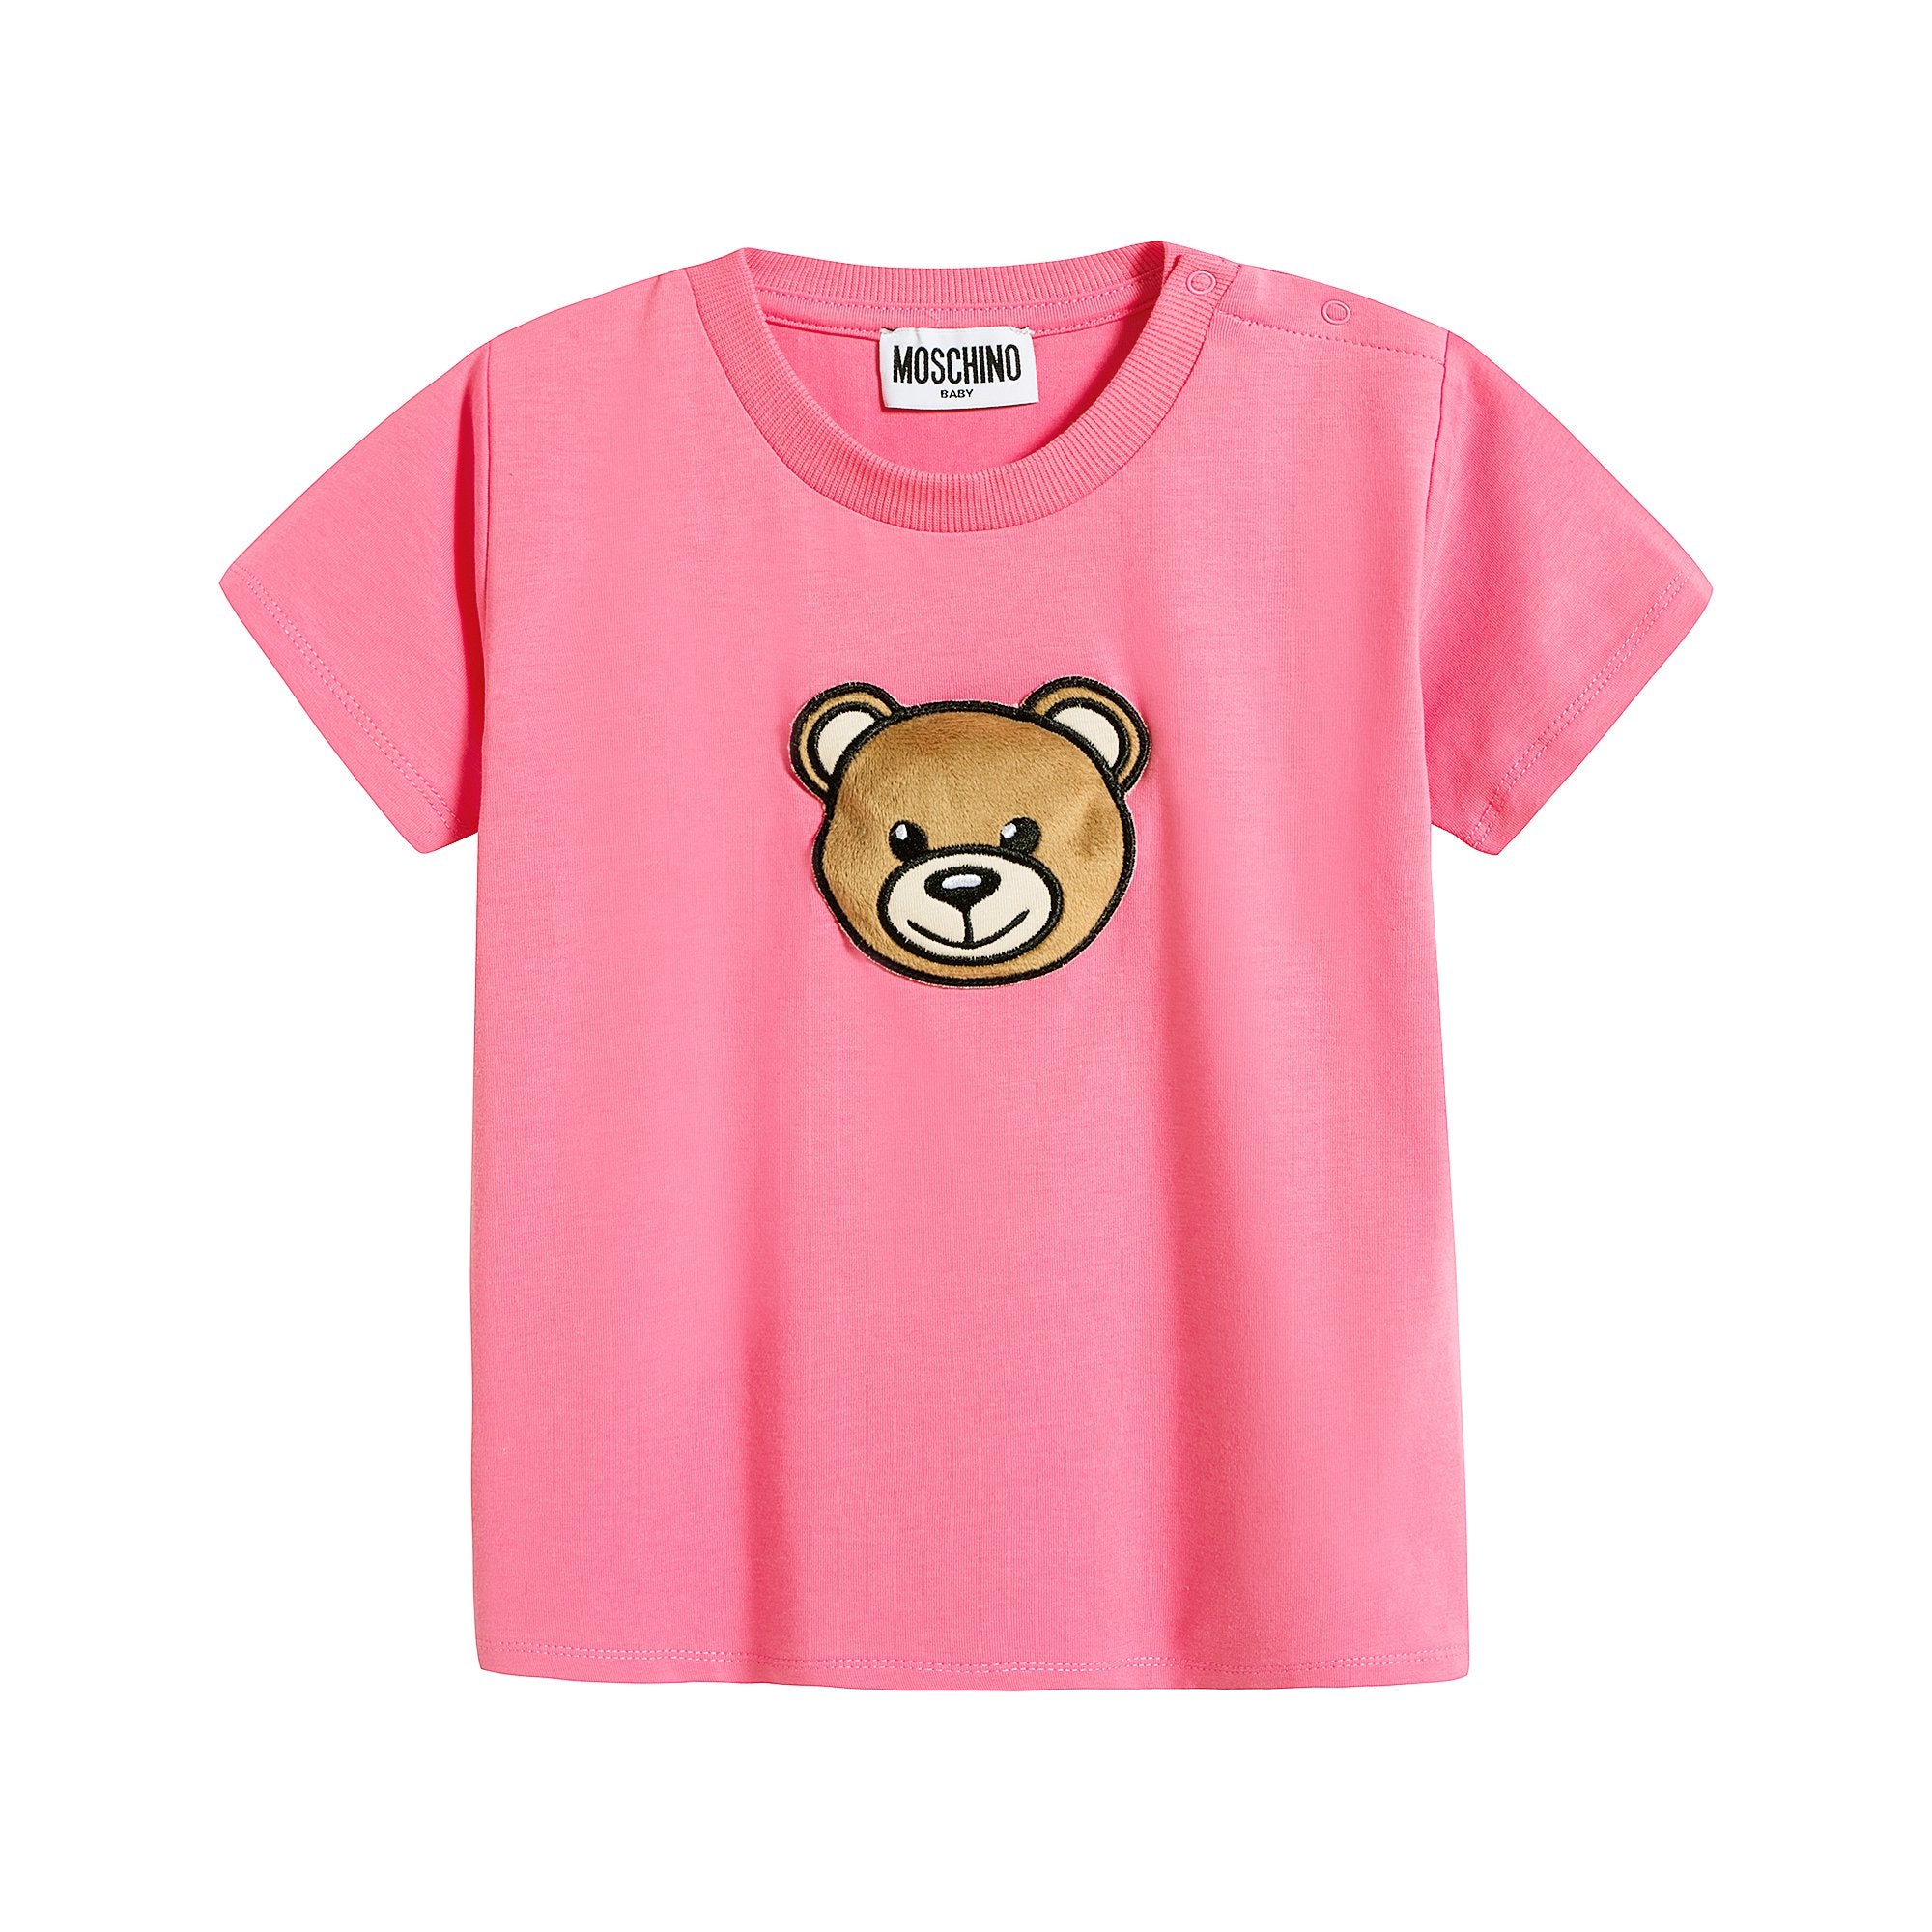 Baby Boys & Girls Pink Cotton T-Shirt